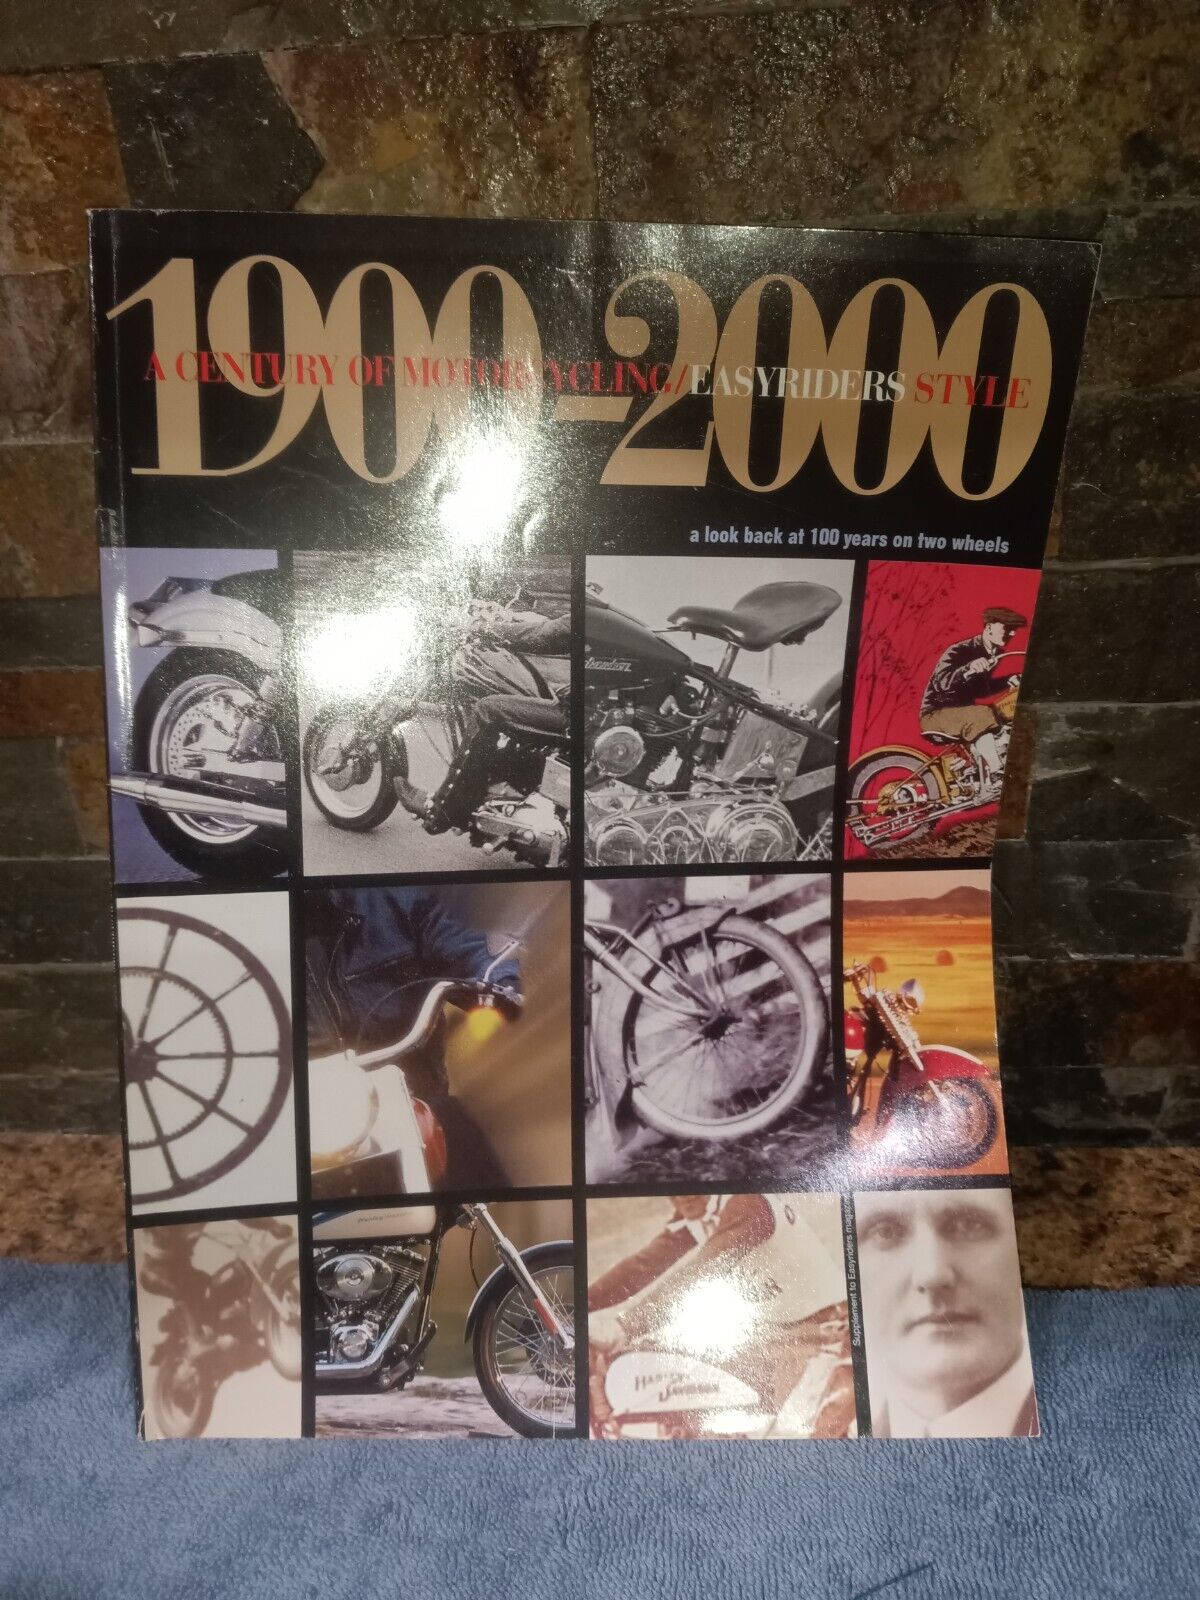 1900-2000 A Century Of Motorcycle/Easyriders Style Magazine